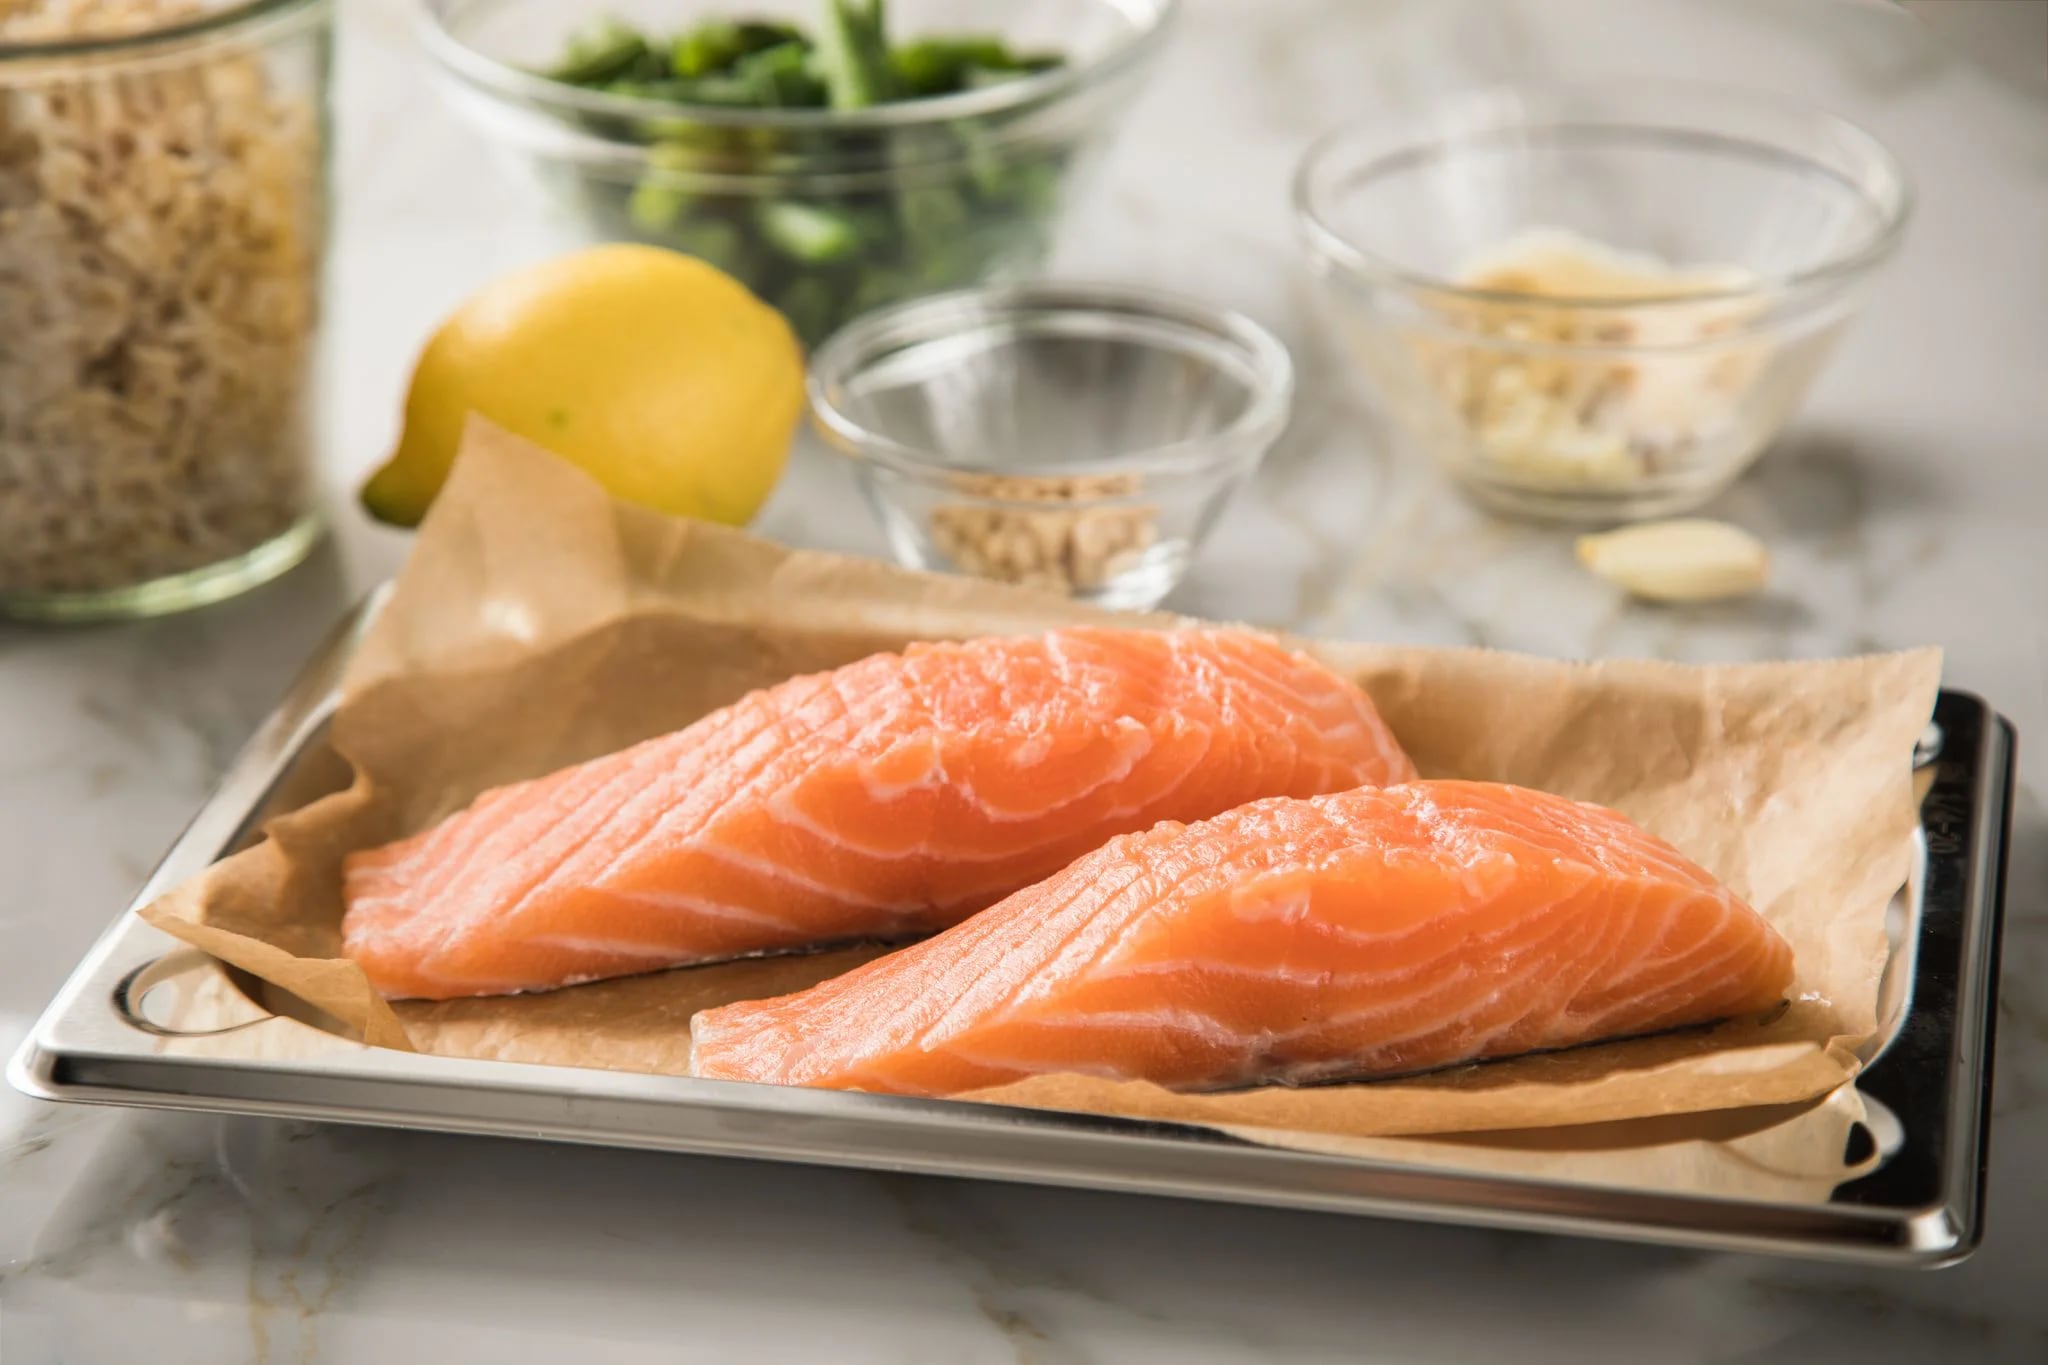 Una ración de 100 gramos de salmón aporta 20 gramos de proteína (DPA)